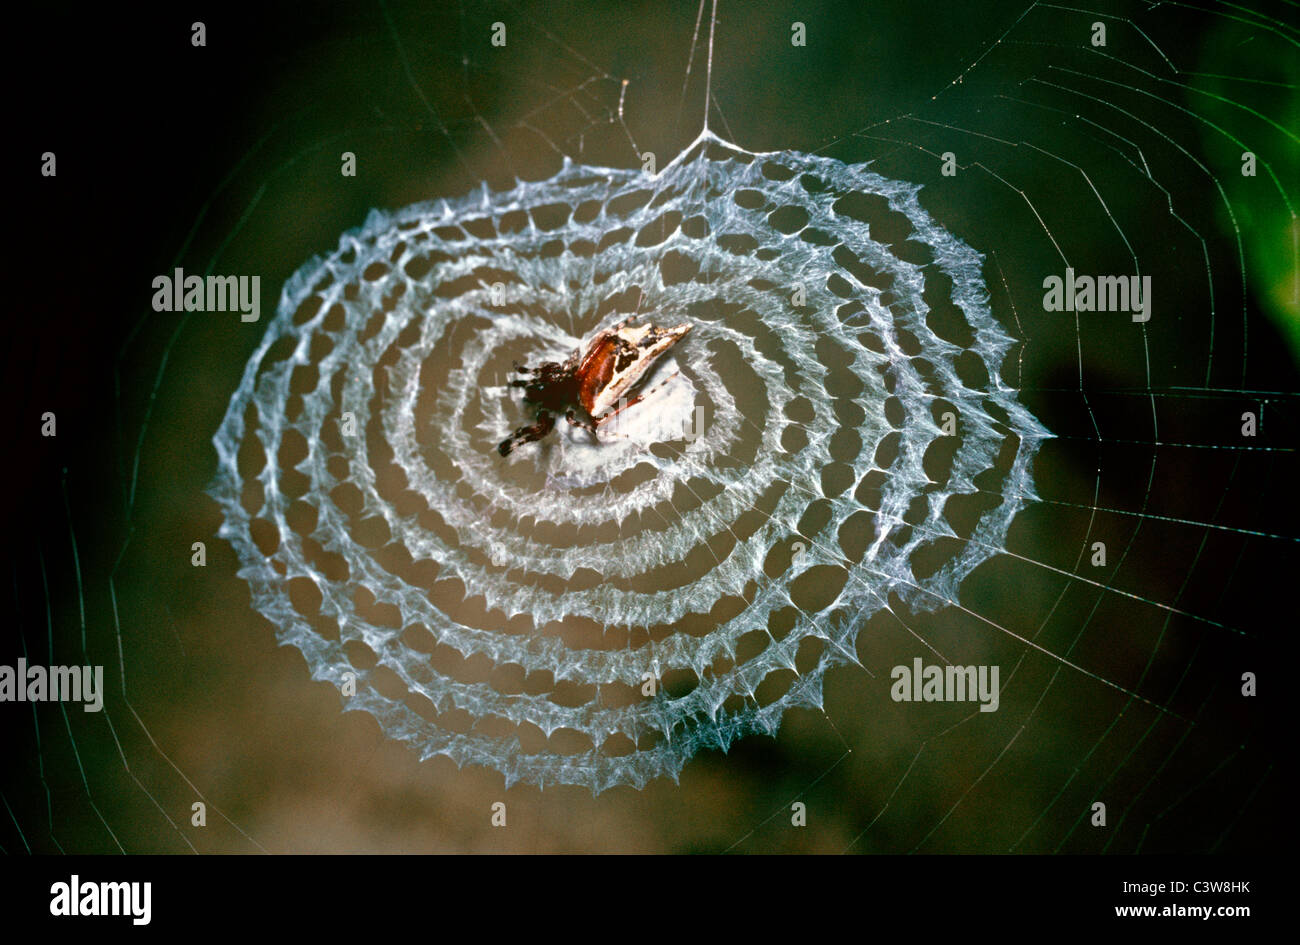 Insel Cyclosa Spinne / Variable Lockvogel Spinne (Cyclosa Insulana) weiblich auf der Stabilimentum in ihrem Netz, Regenwald Sumatra Stockfoto